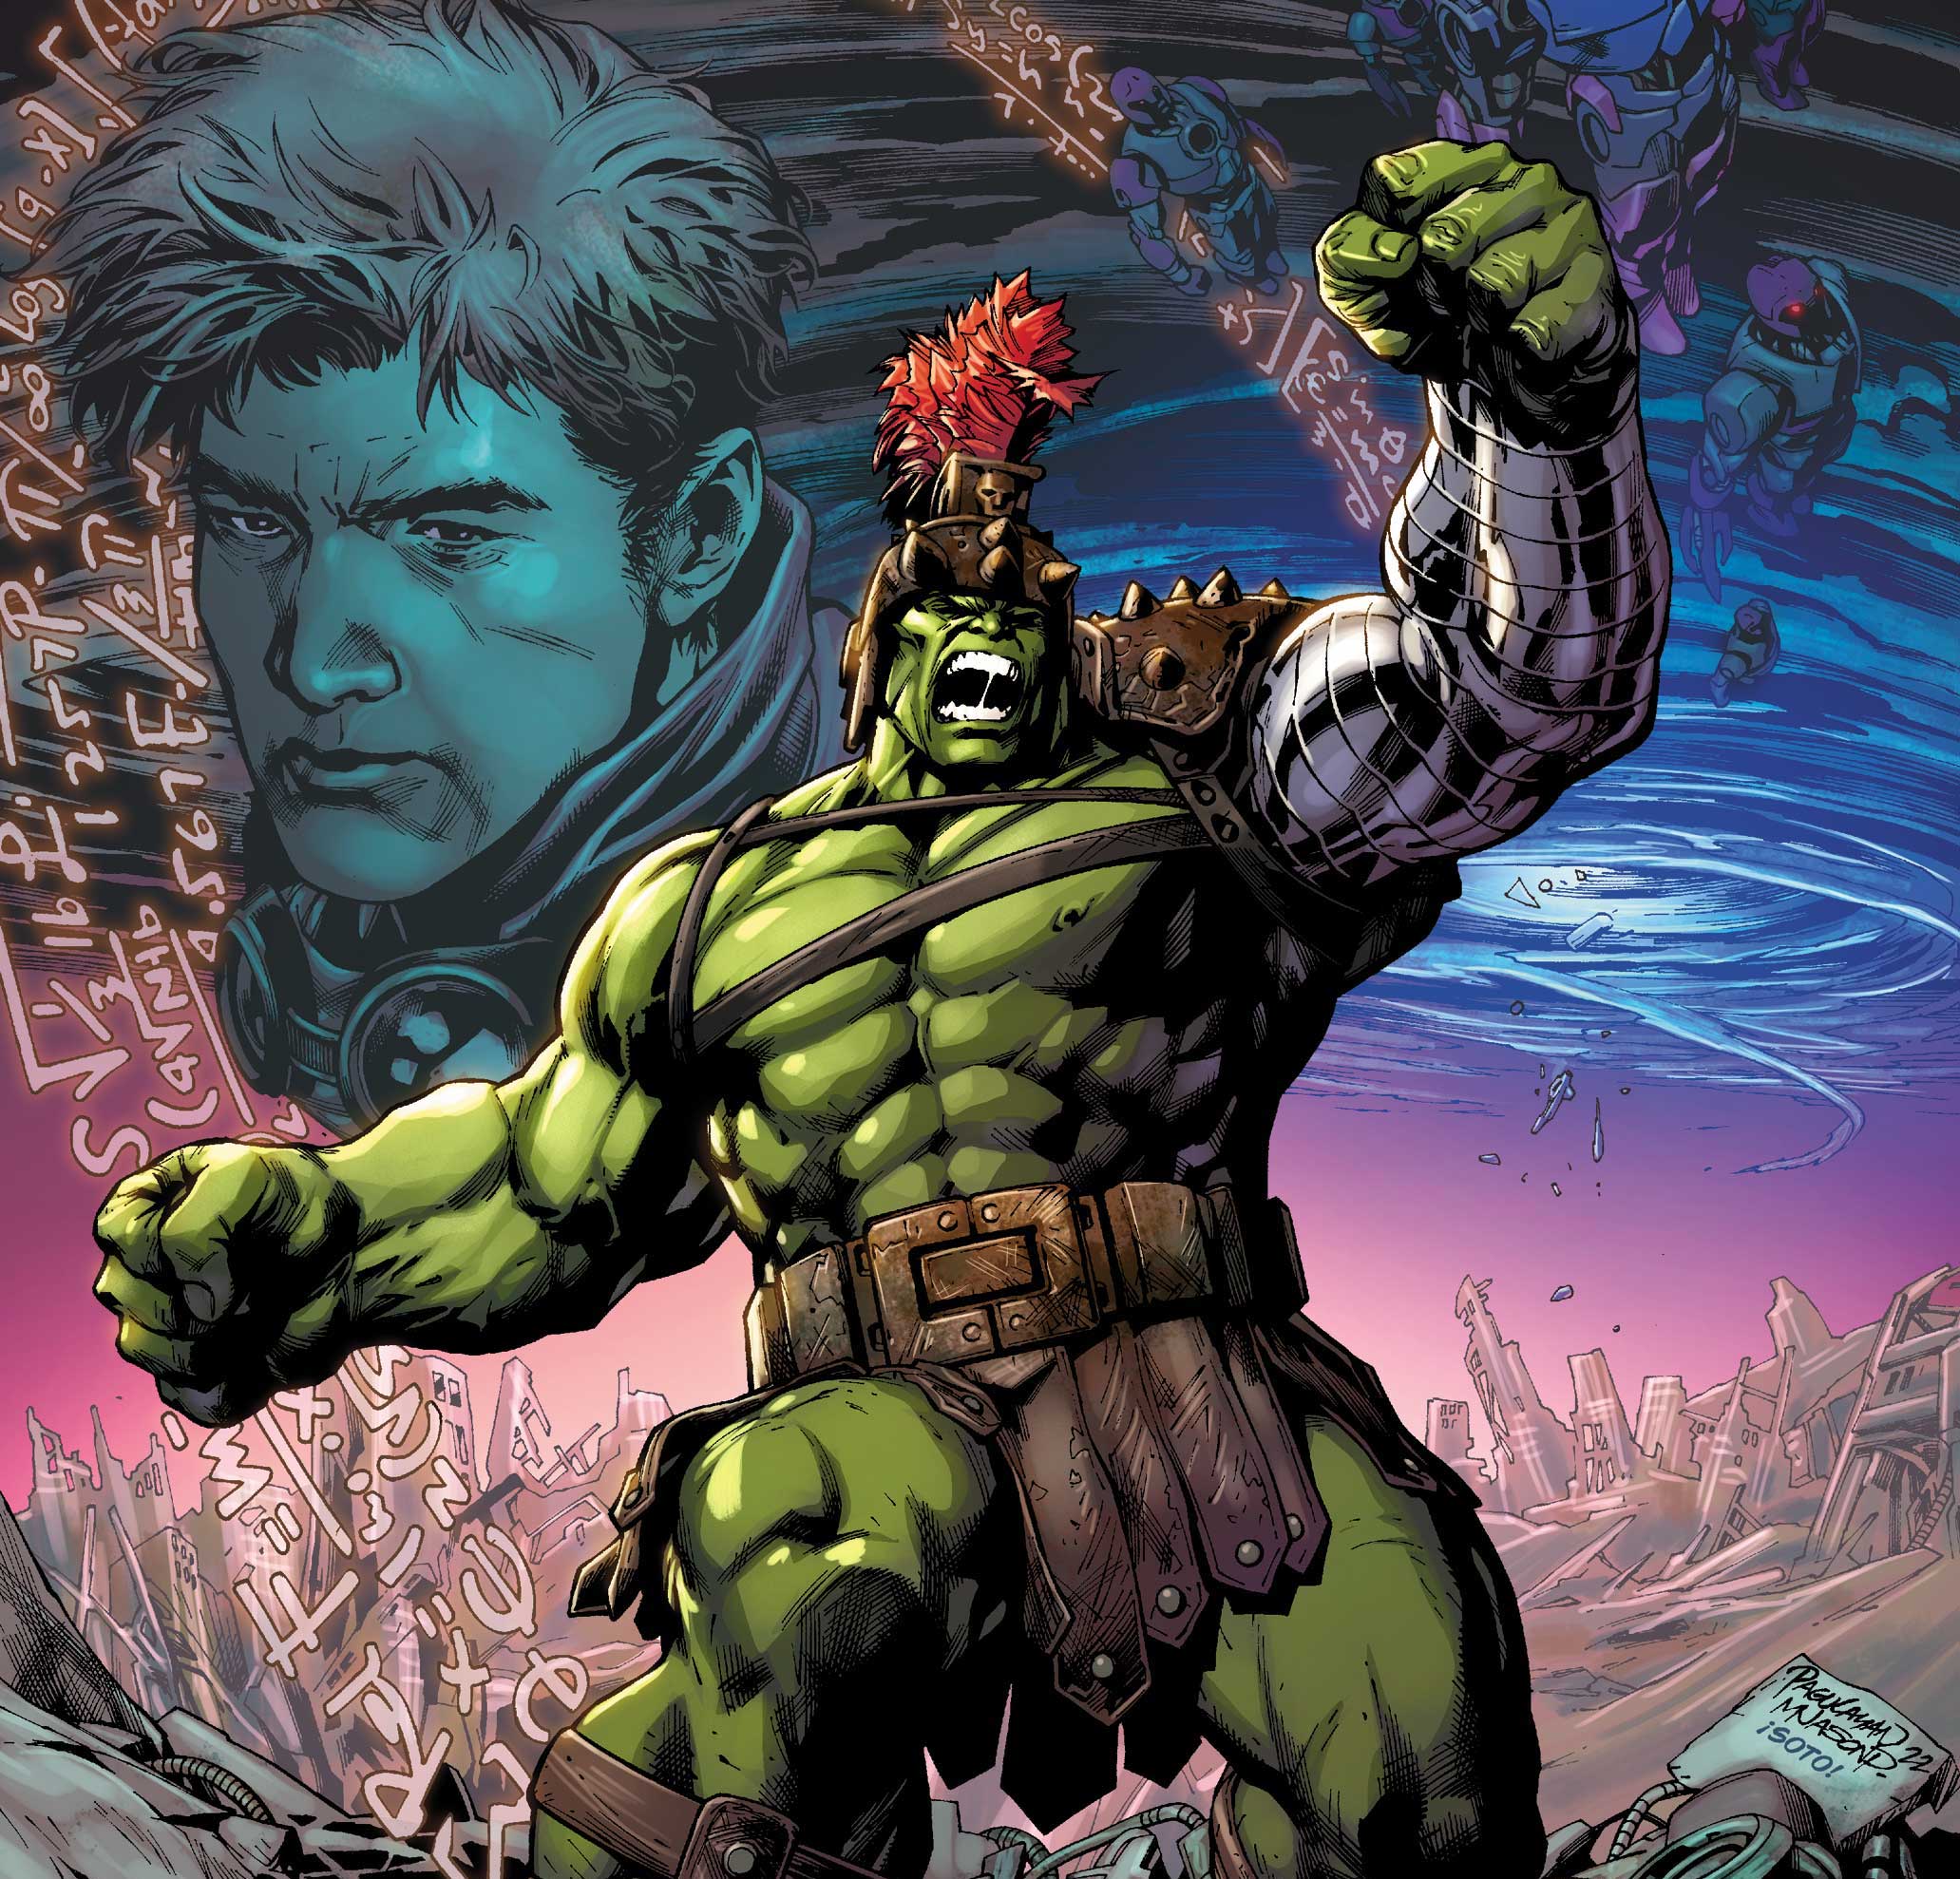 Greg Pak returns to 'Planet Hulk' with 'Worldbreaker' miniseries